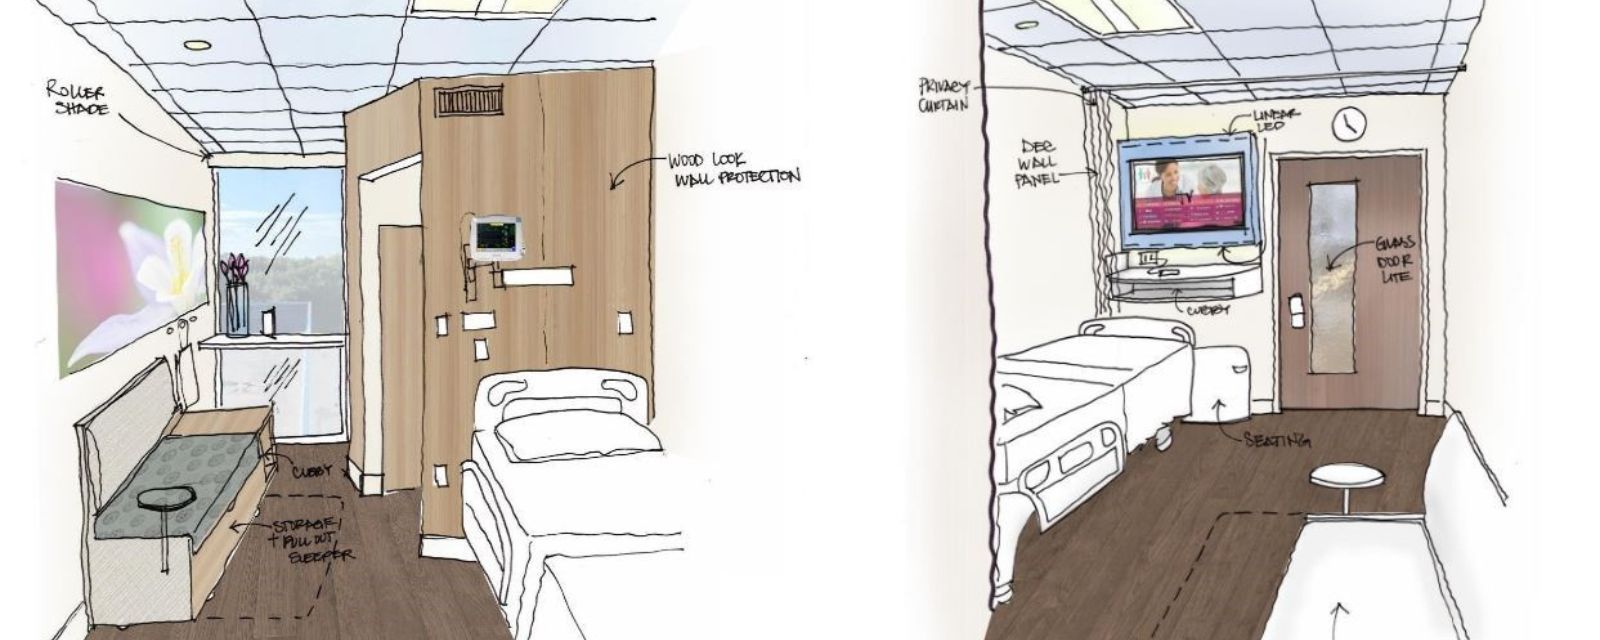 Sketch of patient room in AdventHealth Altamonte